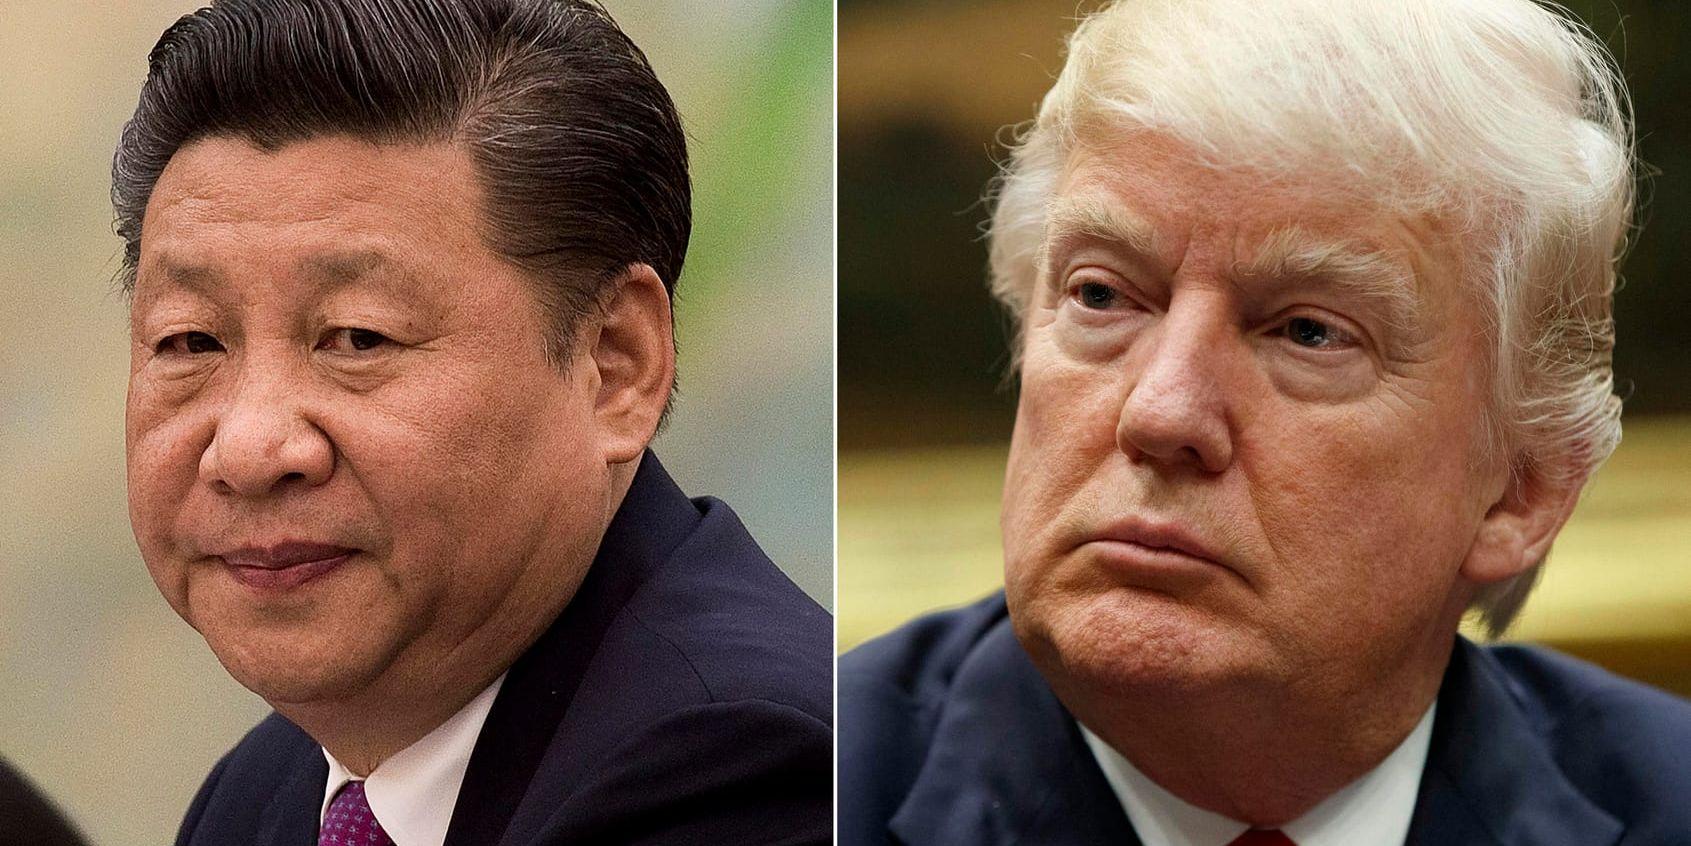 Kinas president Xi Jinping och USA:s president Donald Trump. Montage/Arkivbild.